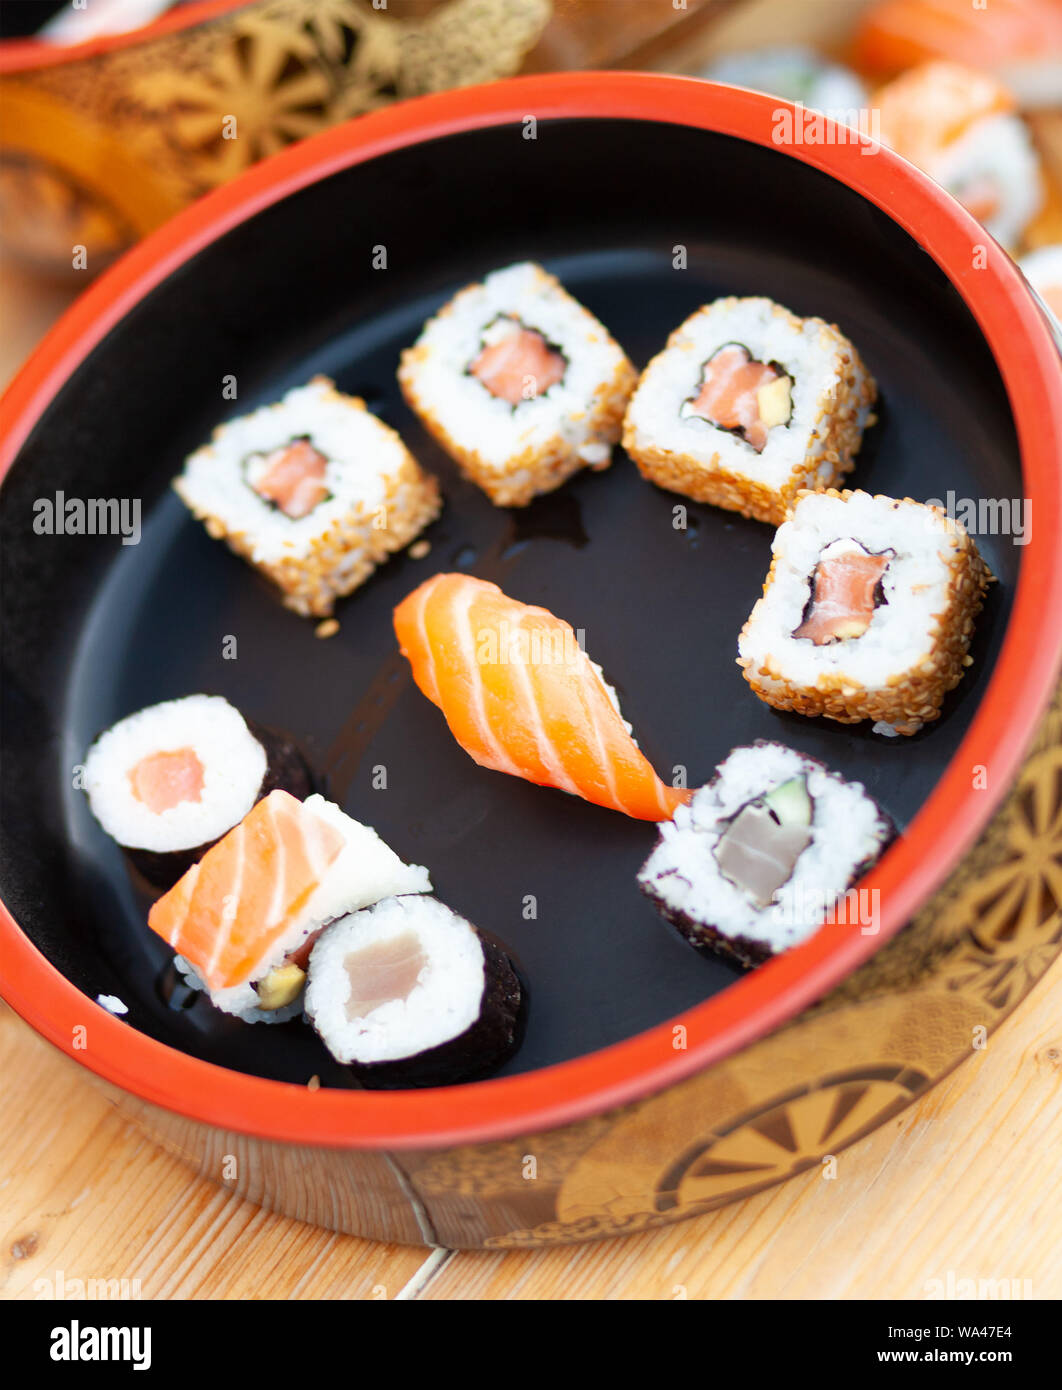 Japanese sushi on a rustic background. Sushi rolls, nigiri and maki. Stock Photo